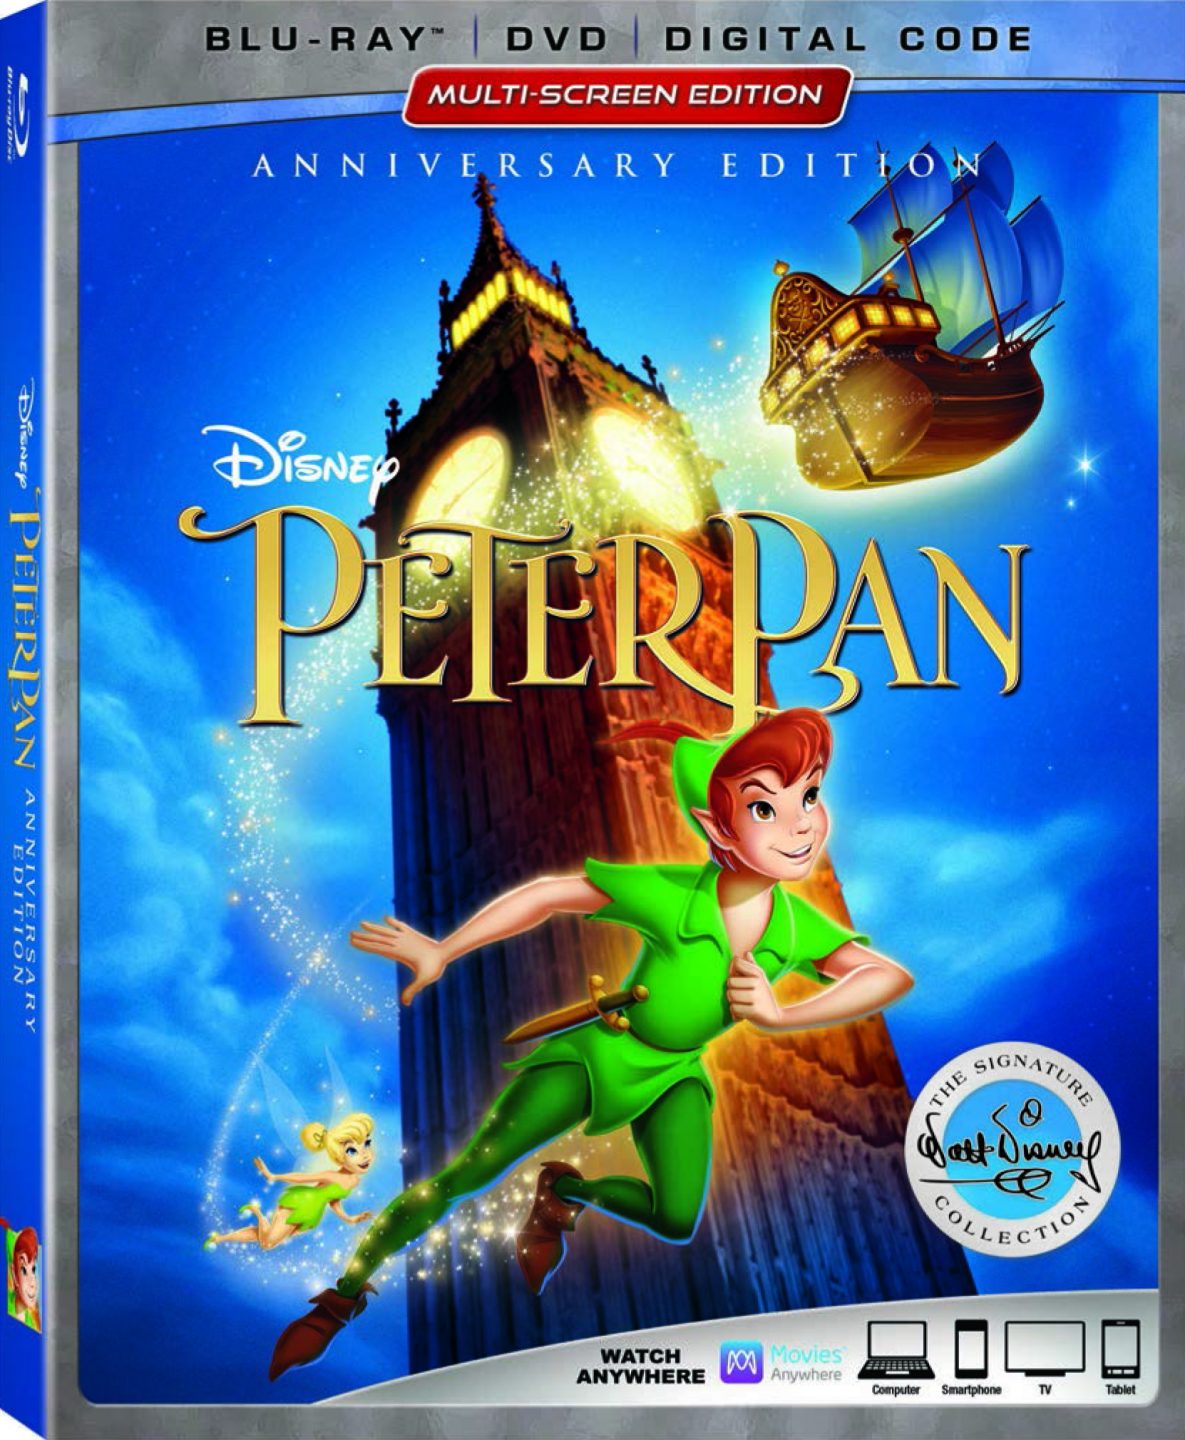 Peter Pan 65th Anniversary Walt Disney Signature Edition Blu-Ray Combo Pack cover (Walt Disney Studios Home Entertainment)